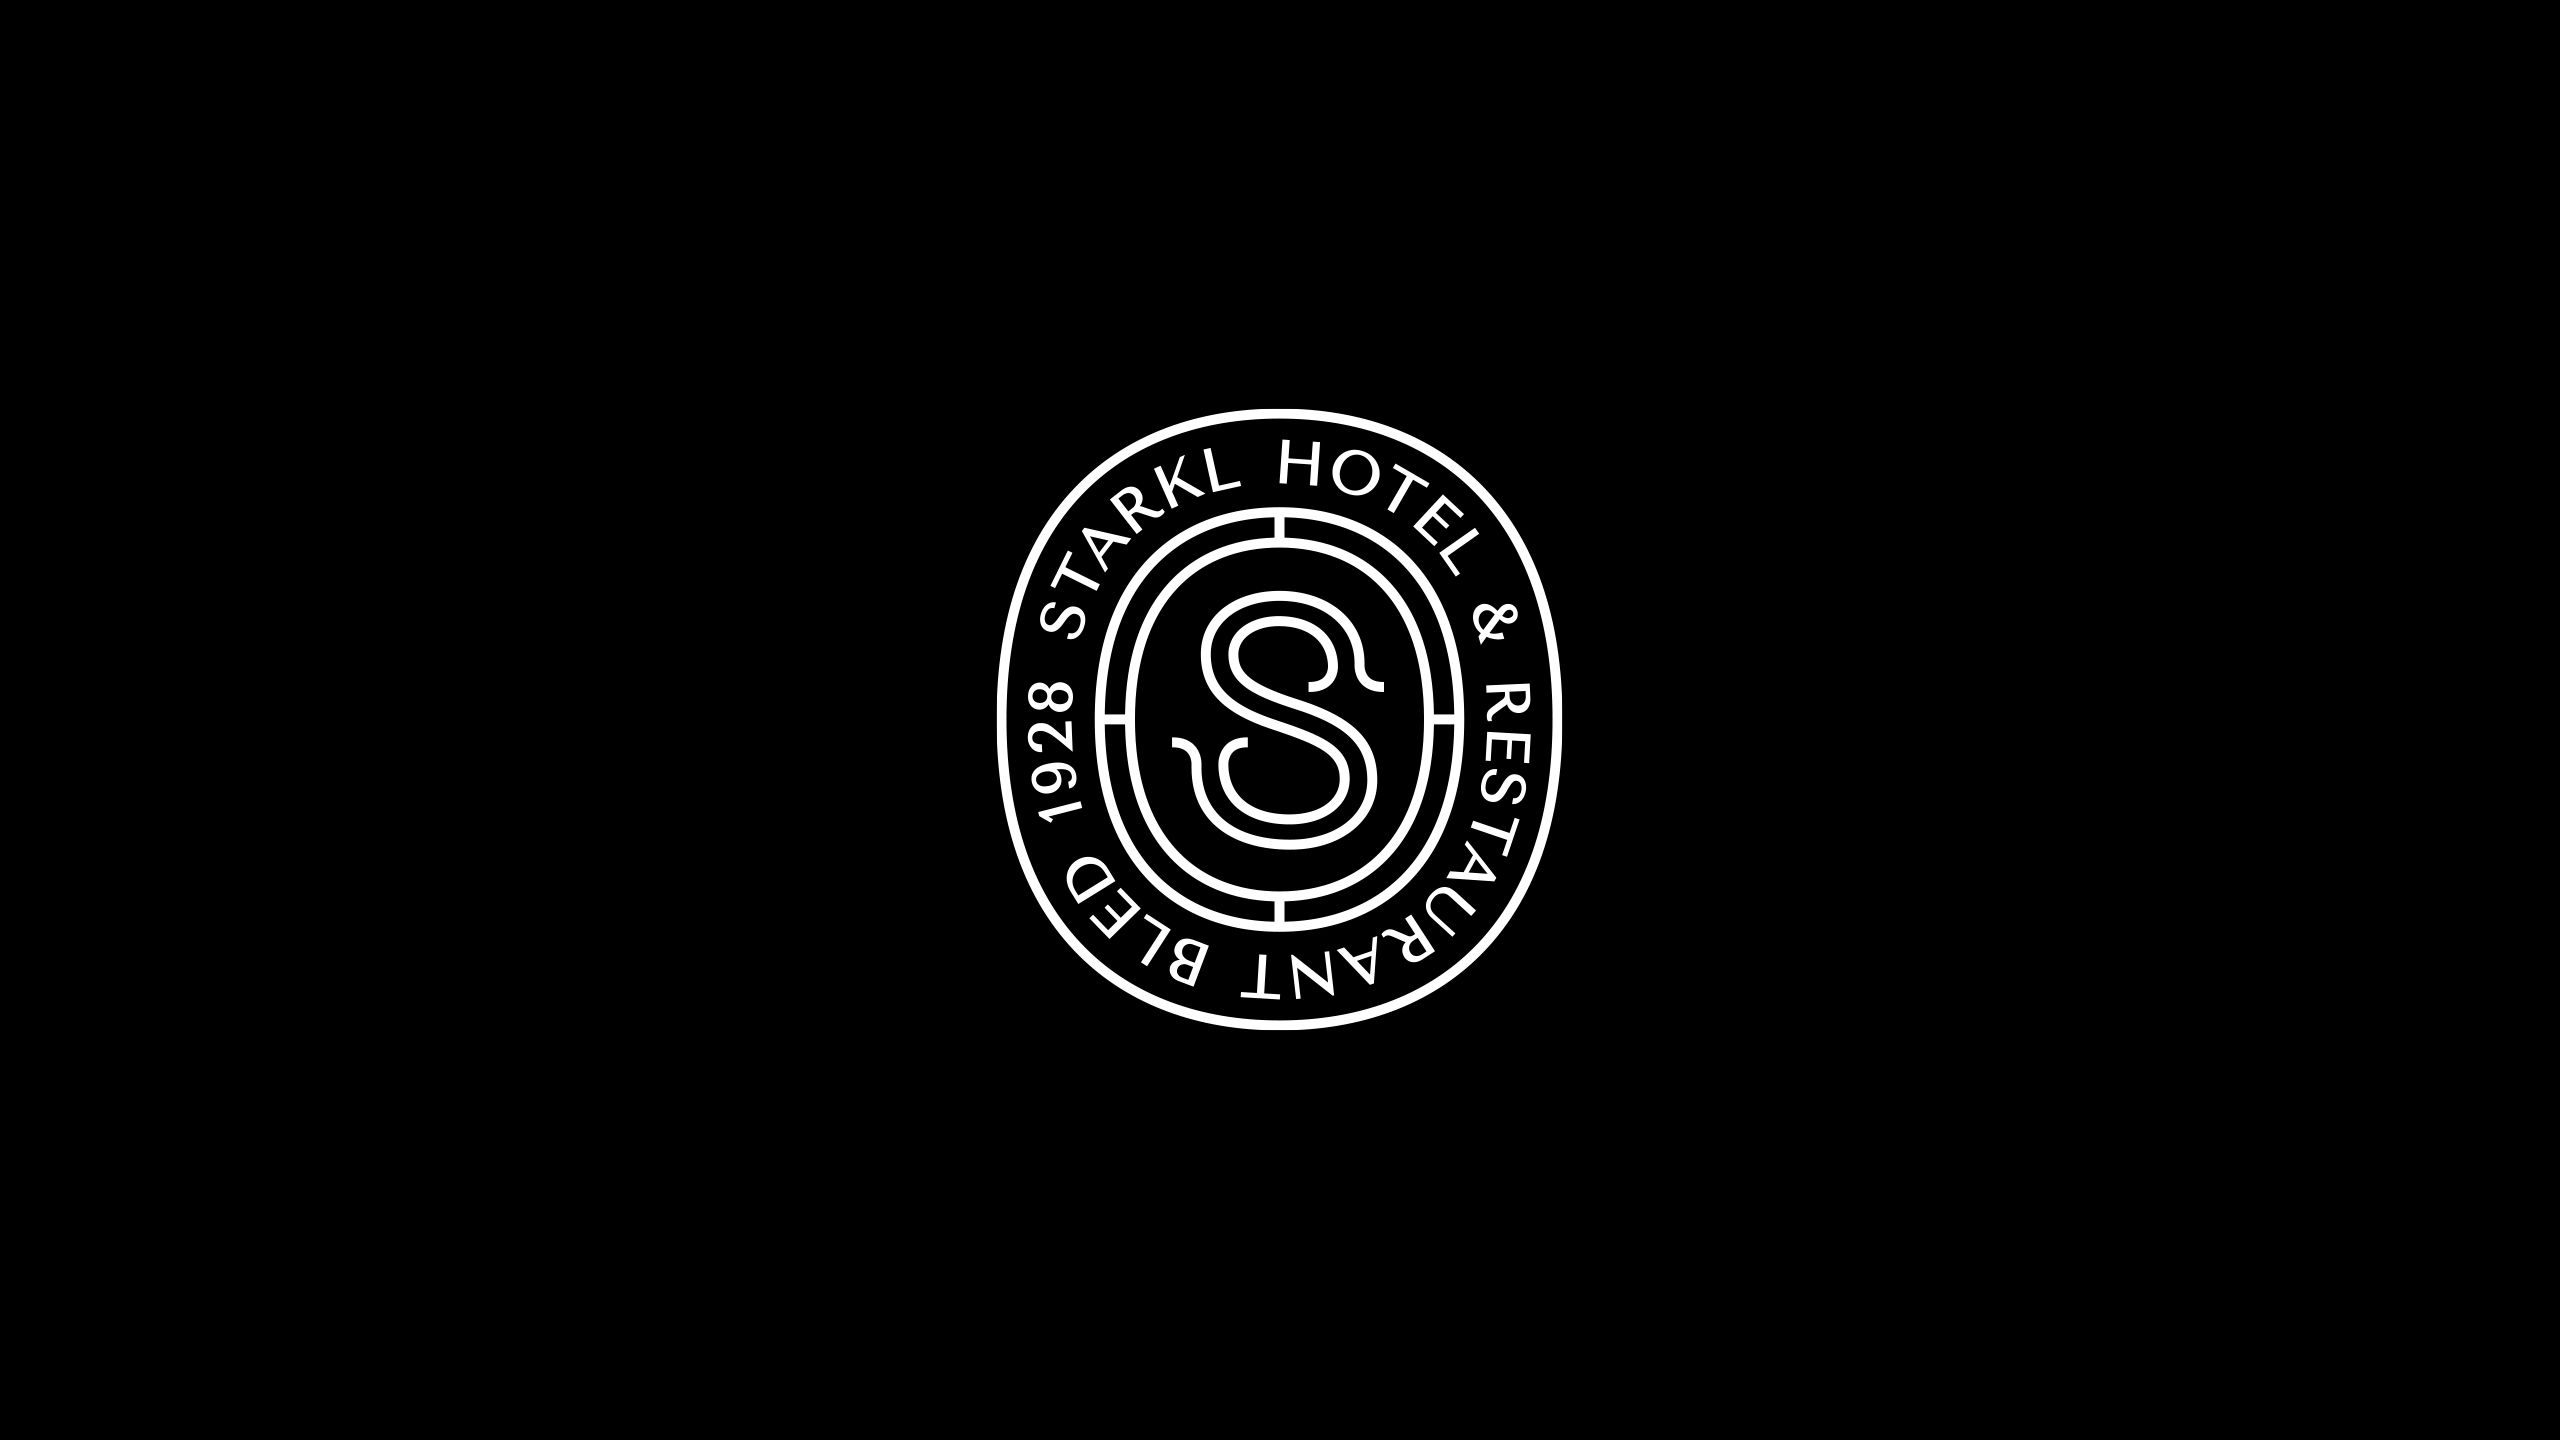 Studio-Hrastar-Logofolio-Starkl-Hotel-Restaurant-3